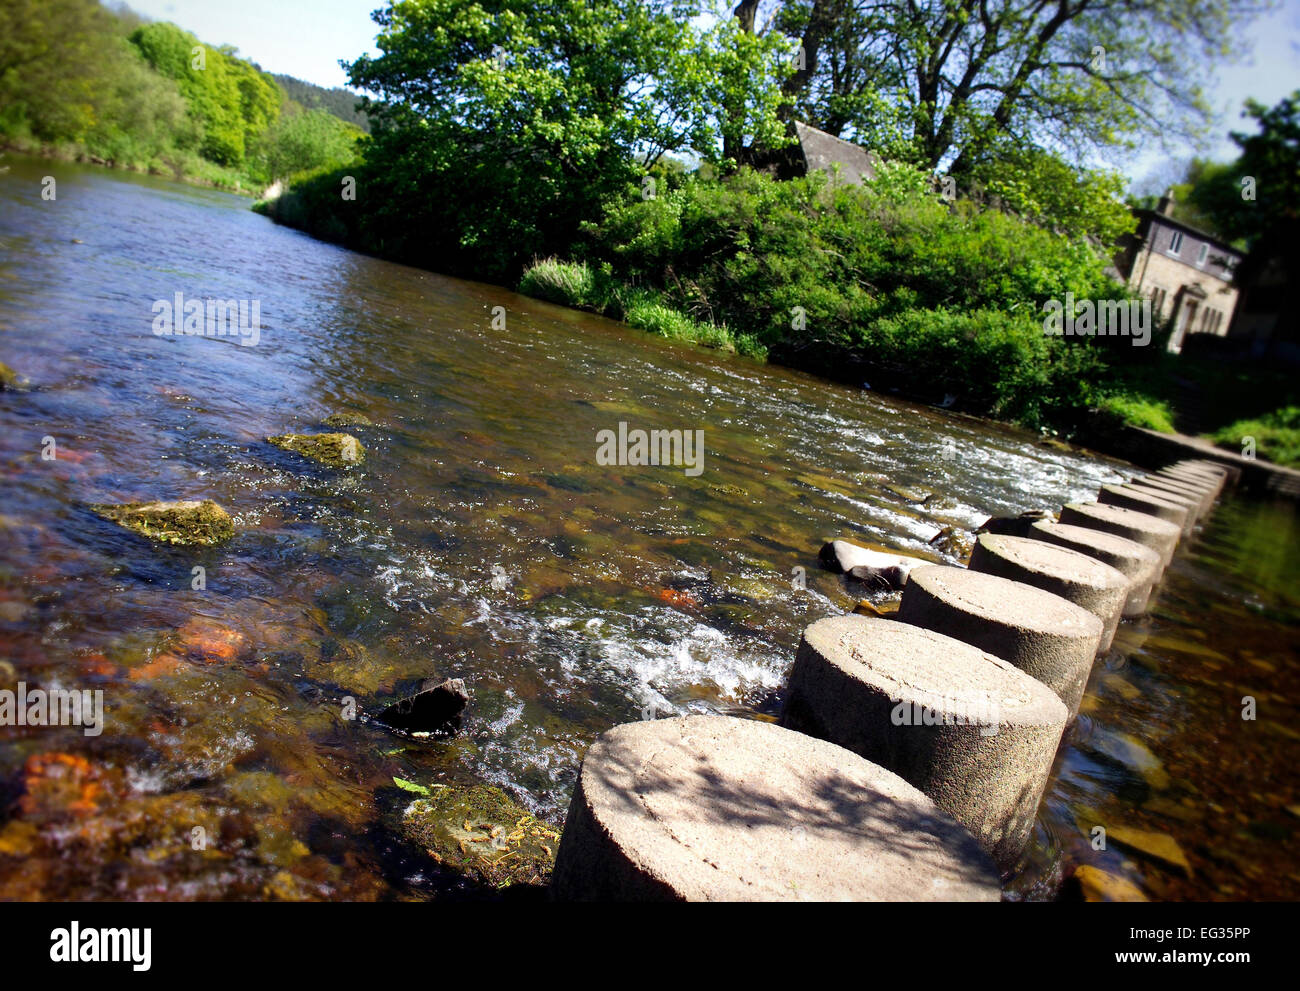 Pietre miliari sul fiume Coquet a Rothbury, Northumberland Foto Stock